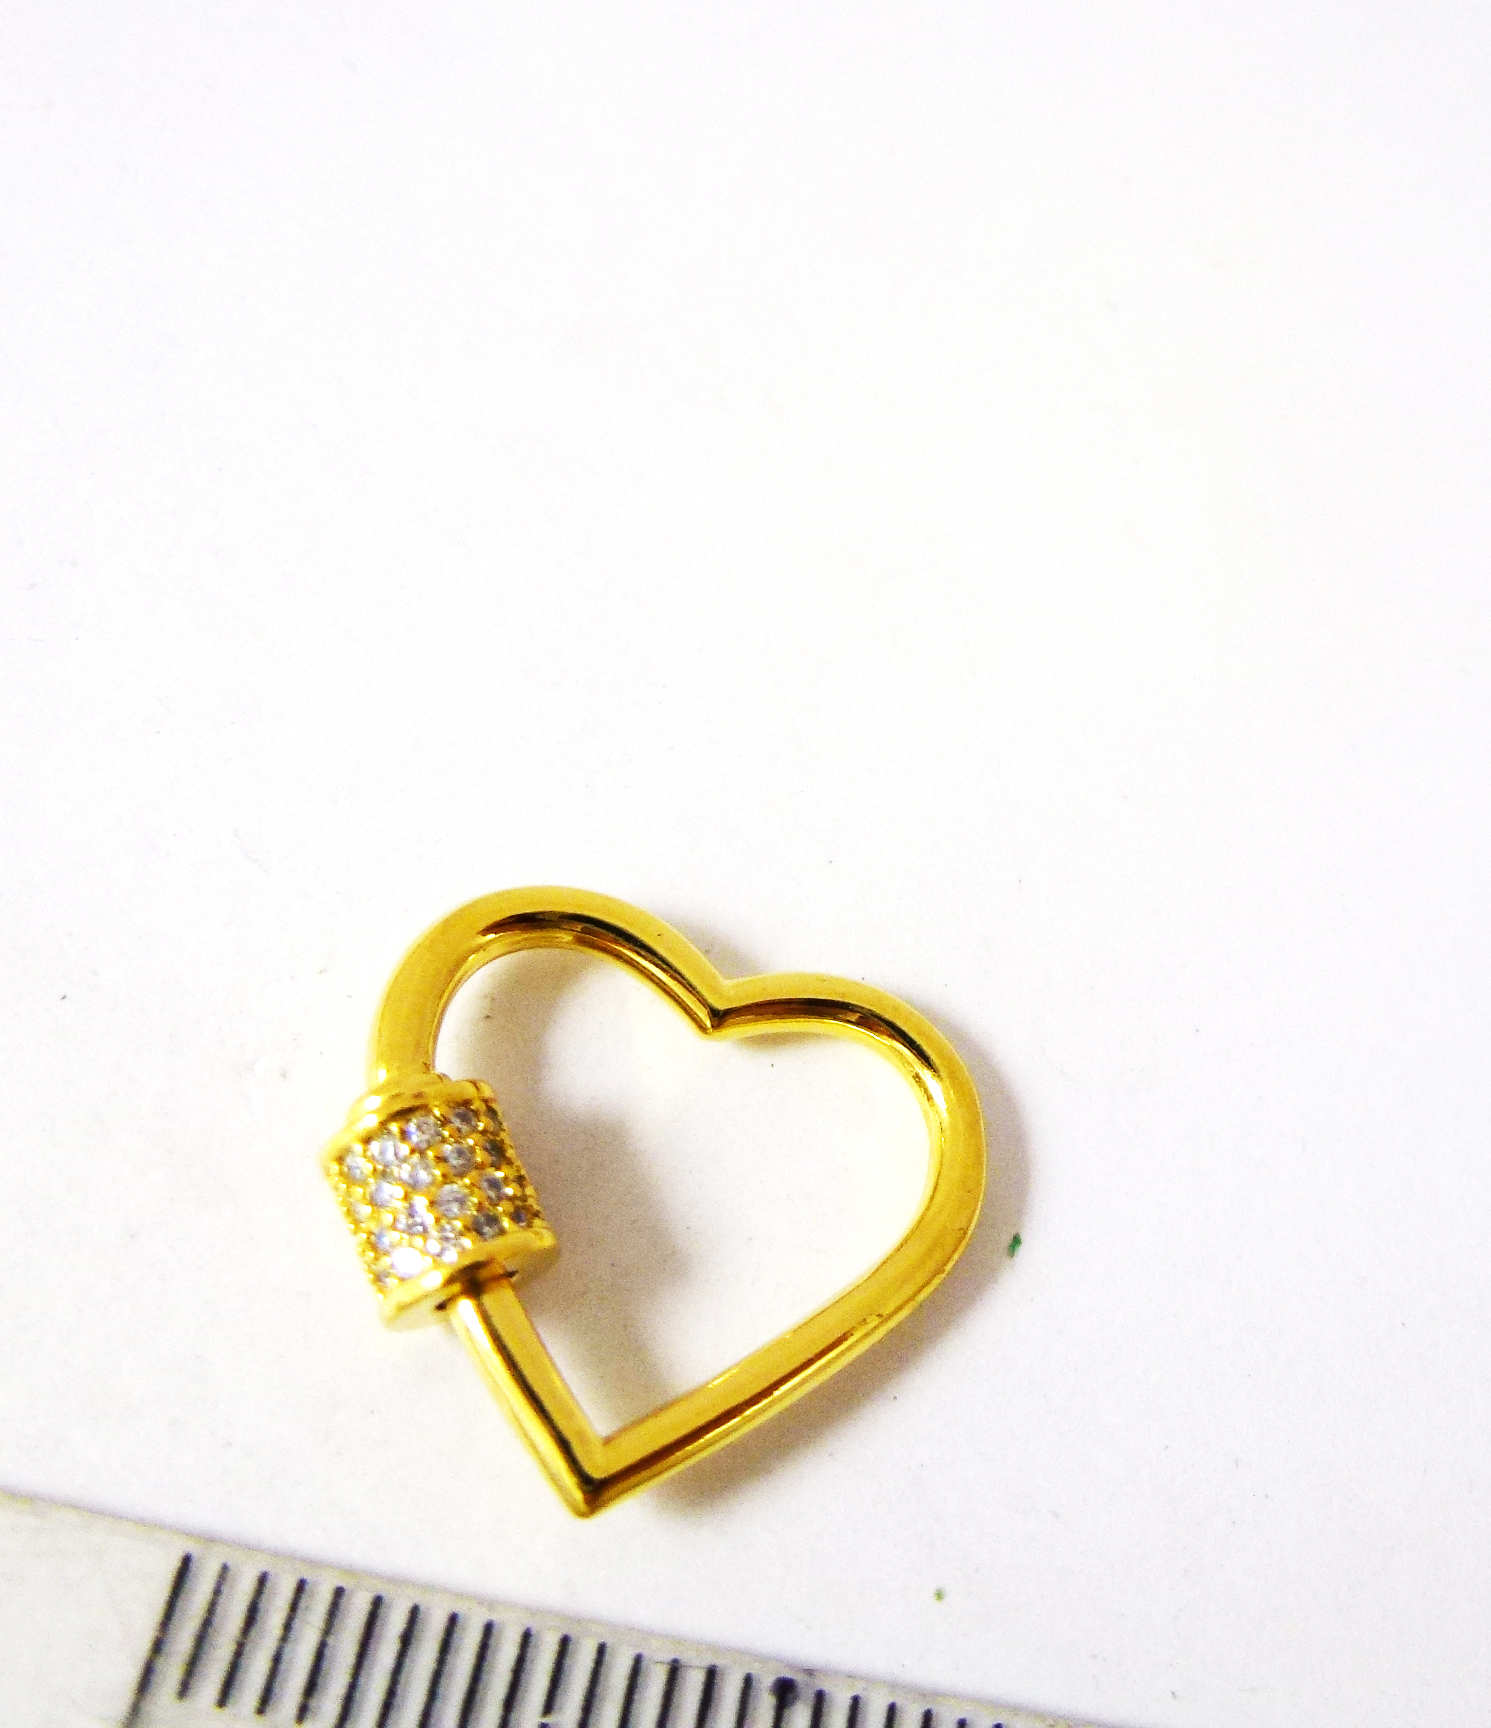 18mm銅鍍金色螺旋鑲鑽心形扣